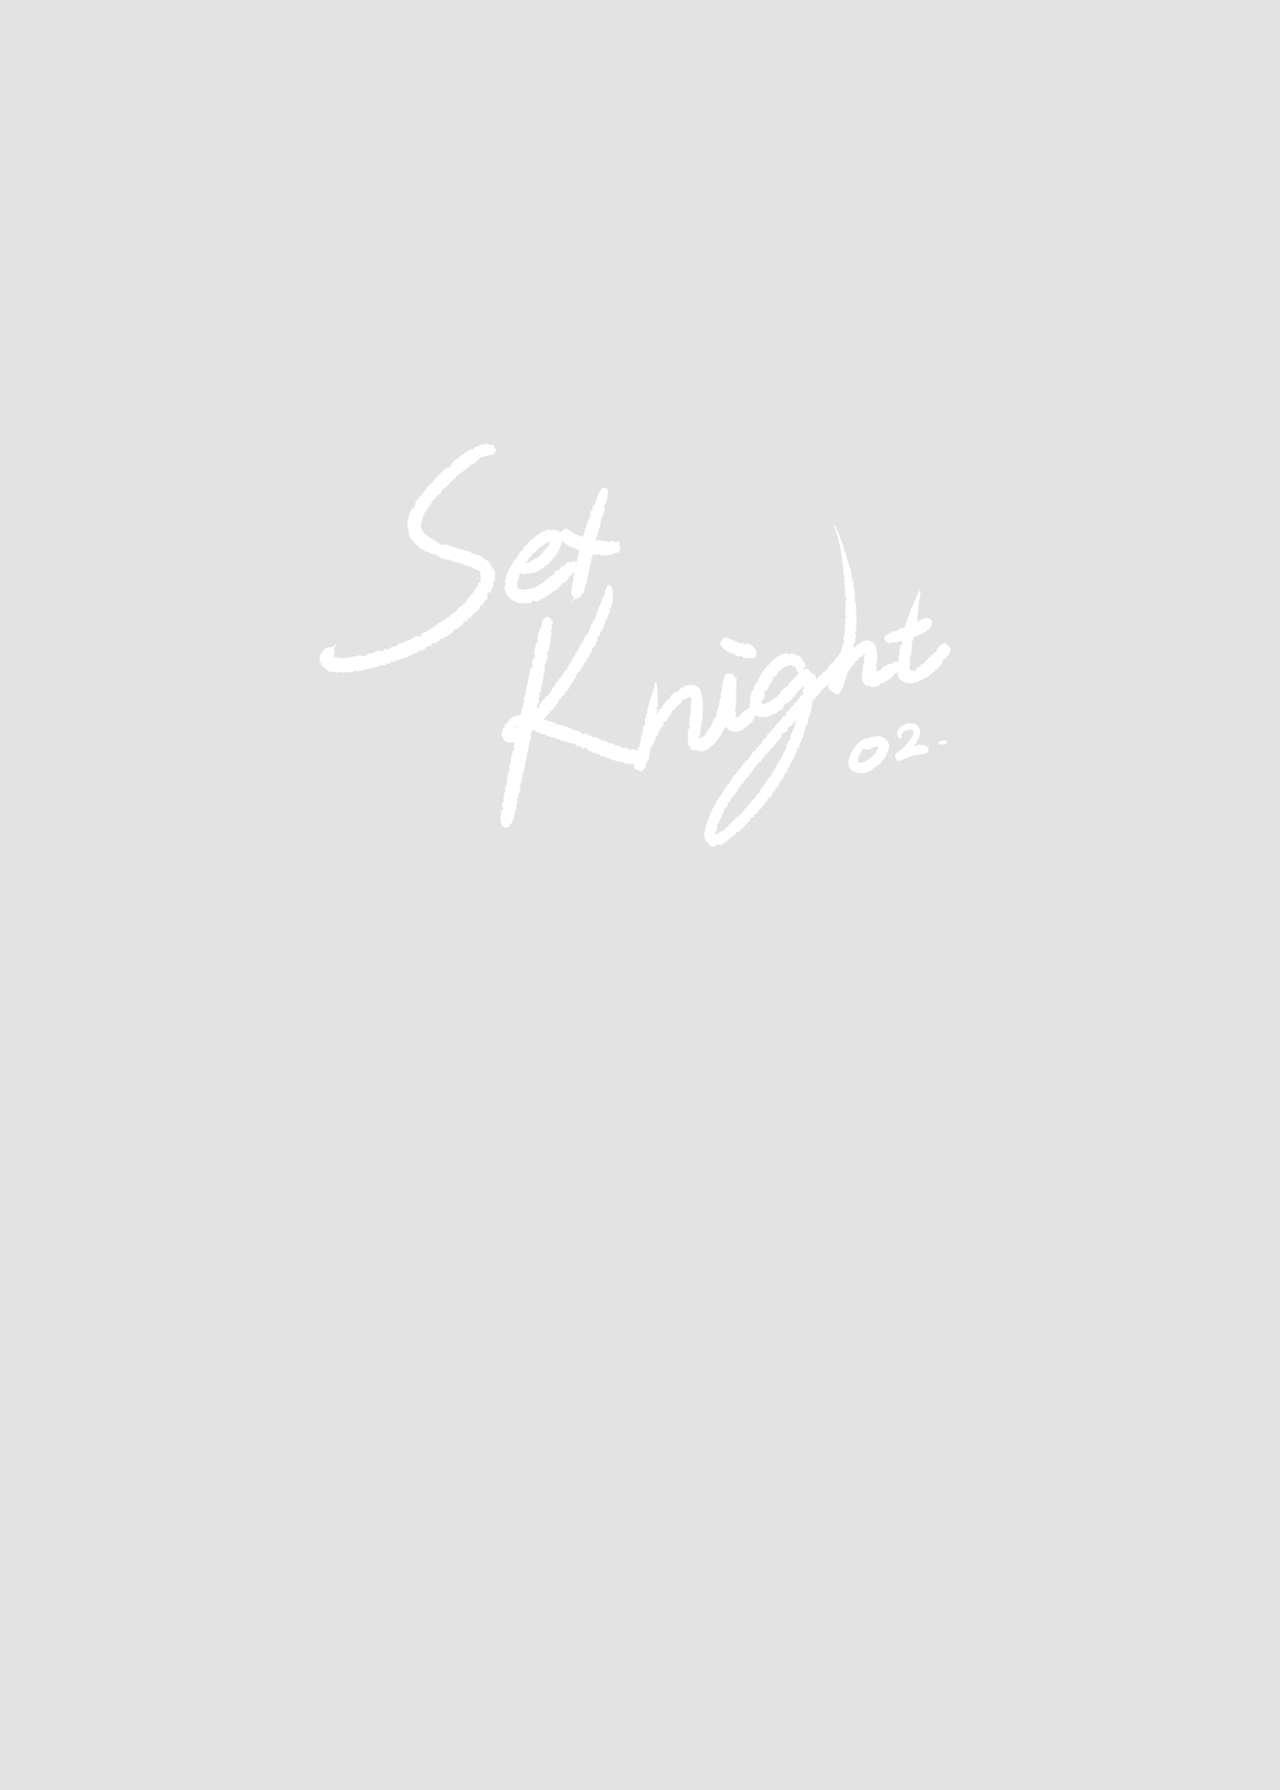 SexKnight_02 1